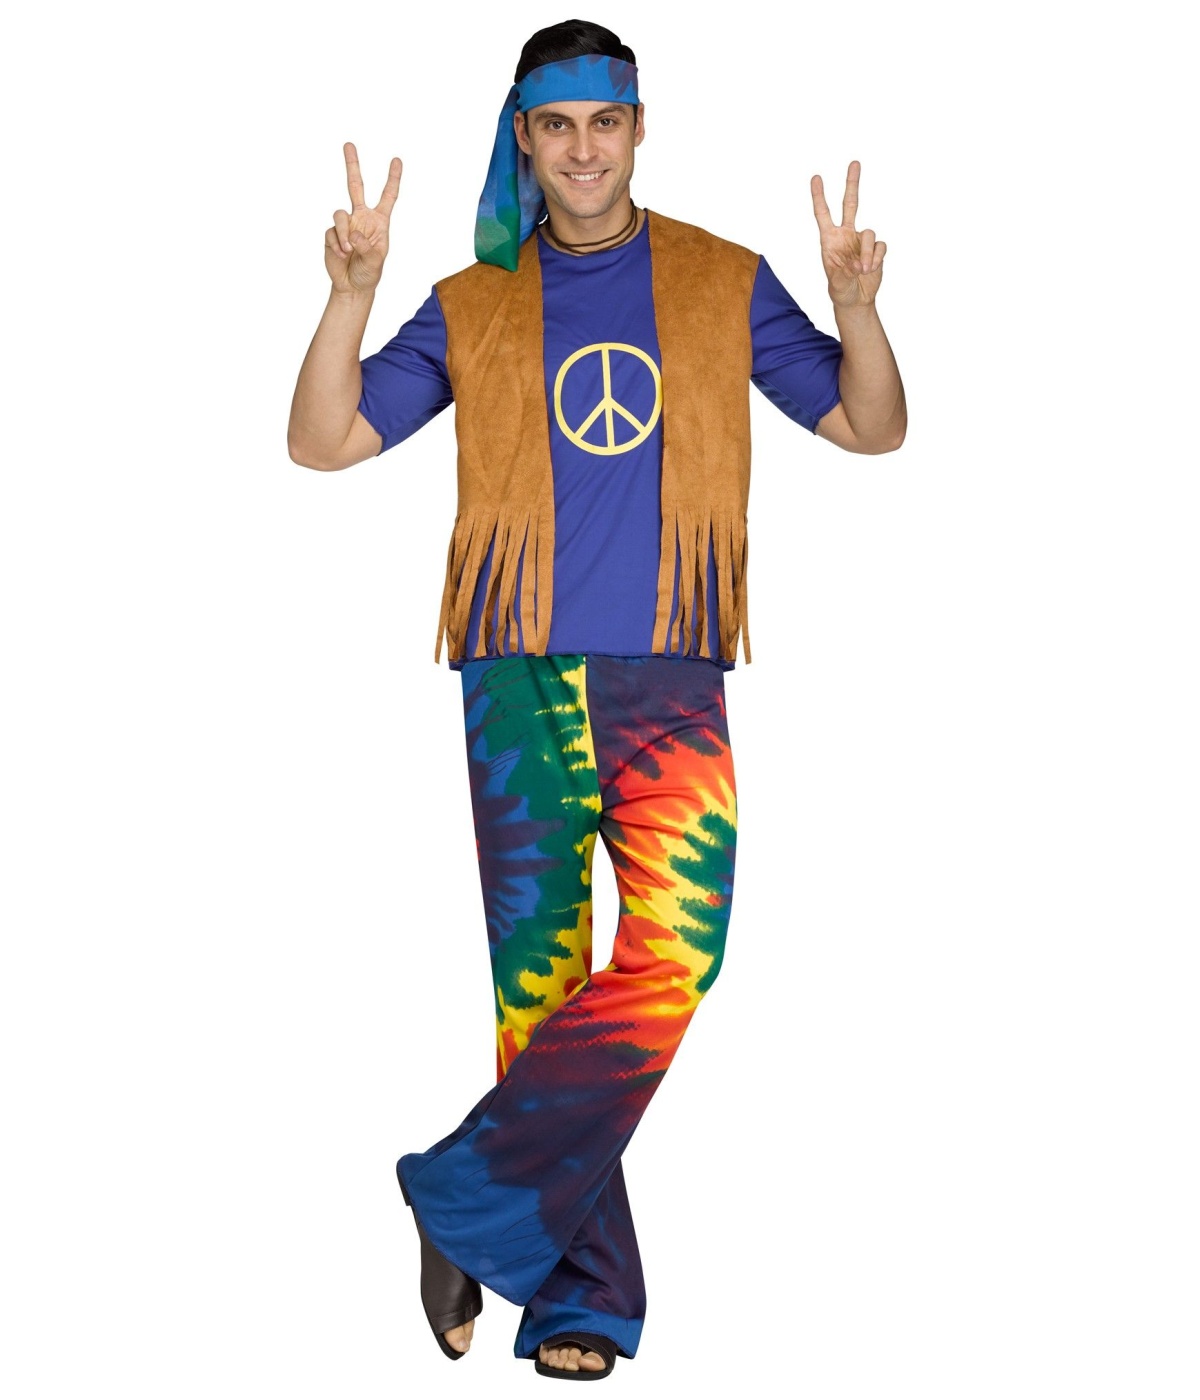 https://img.wondercostumes.com/products/15-3/mens-groovy-hippie-costume.jpg